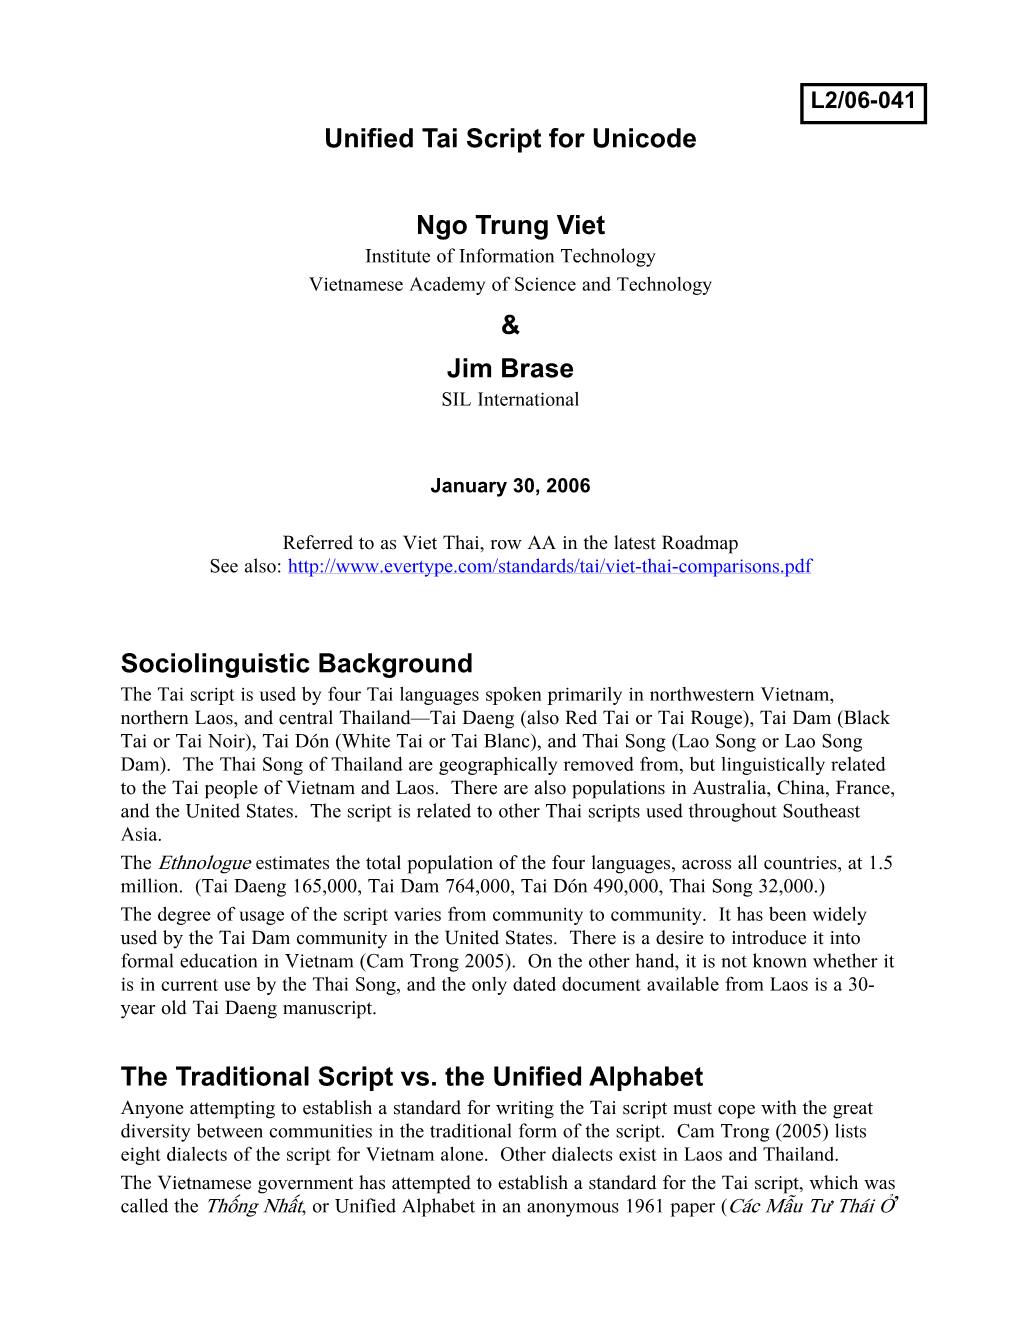 Unified Tai Script for Unicode Ngo Trung Viet & Jim Brase